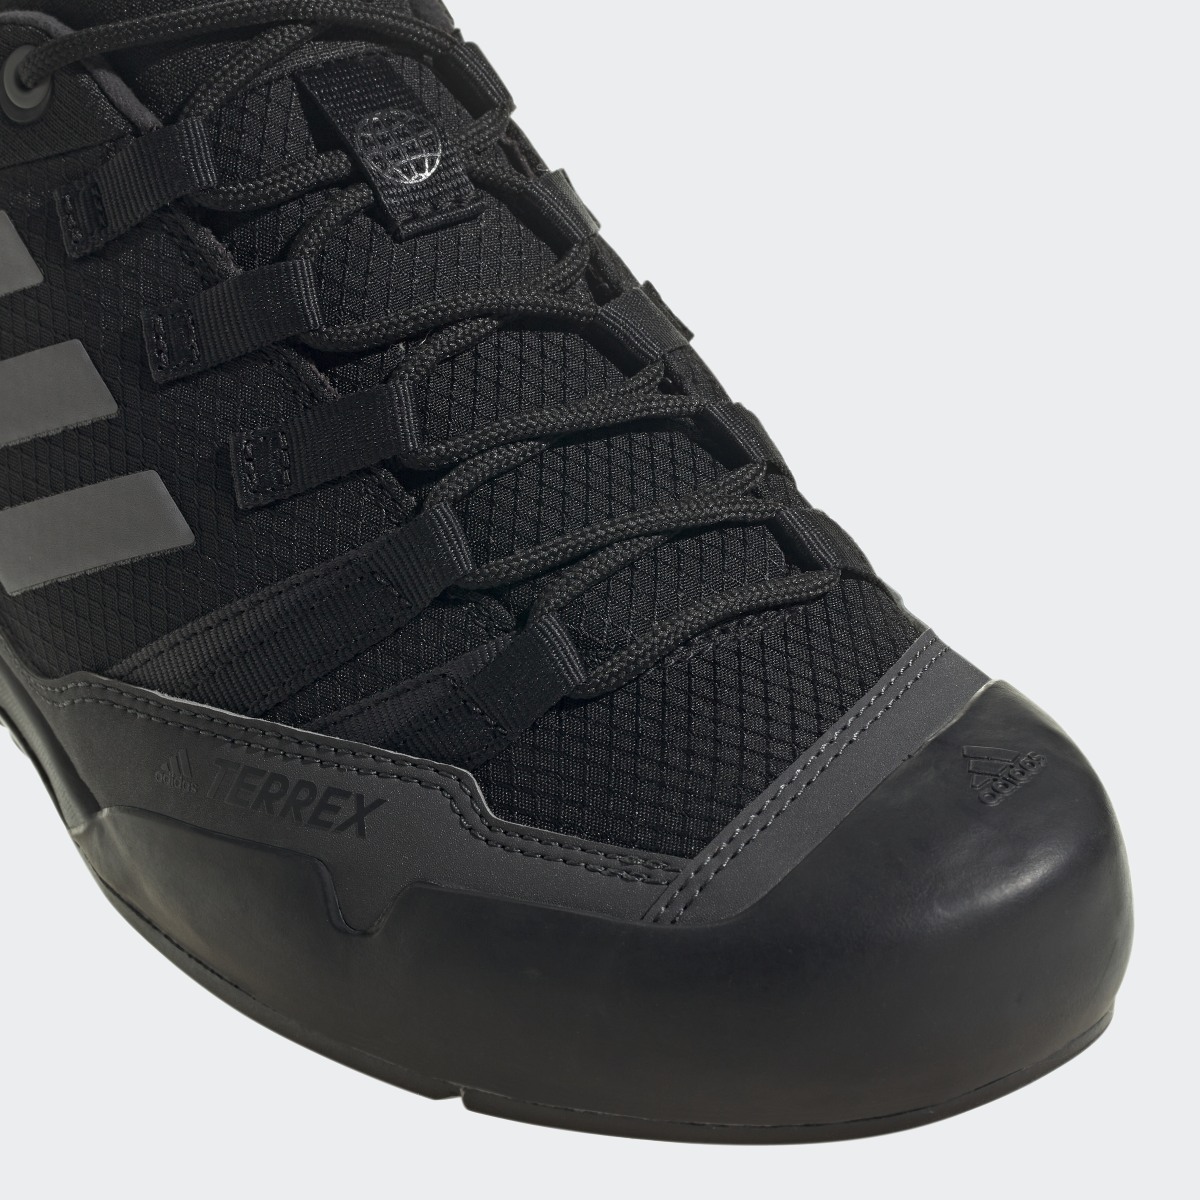 Adidas Terrex Swift Solo Approach Shoes. 4